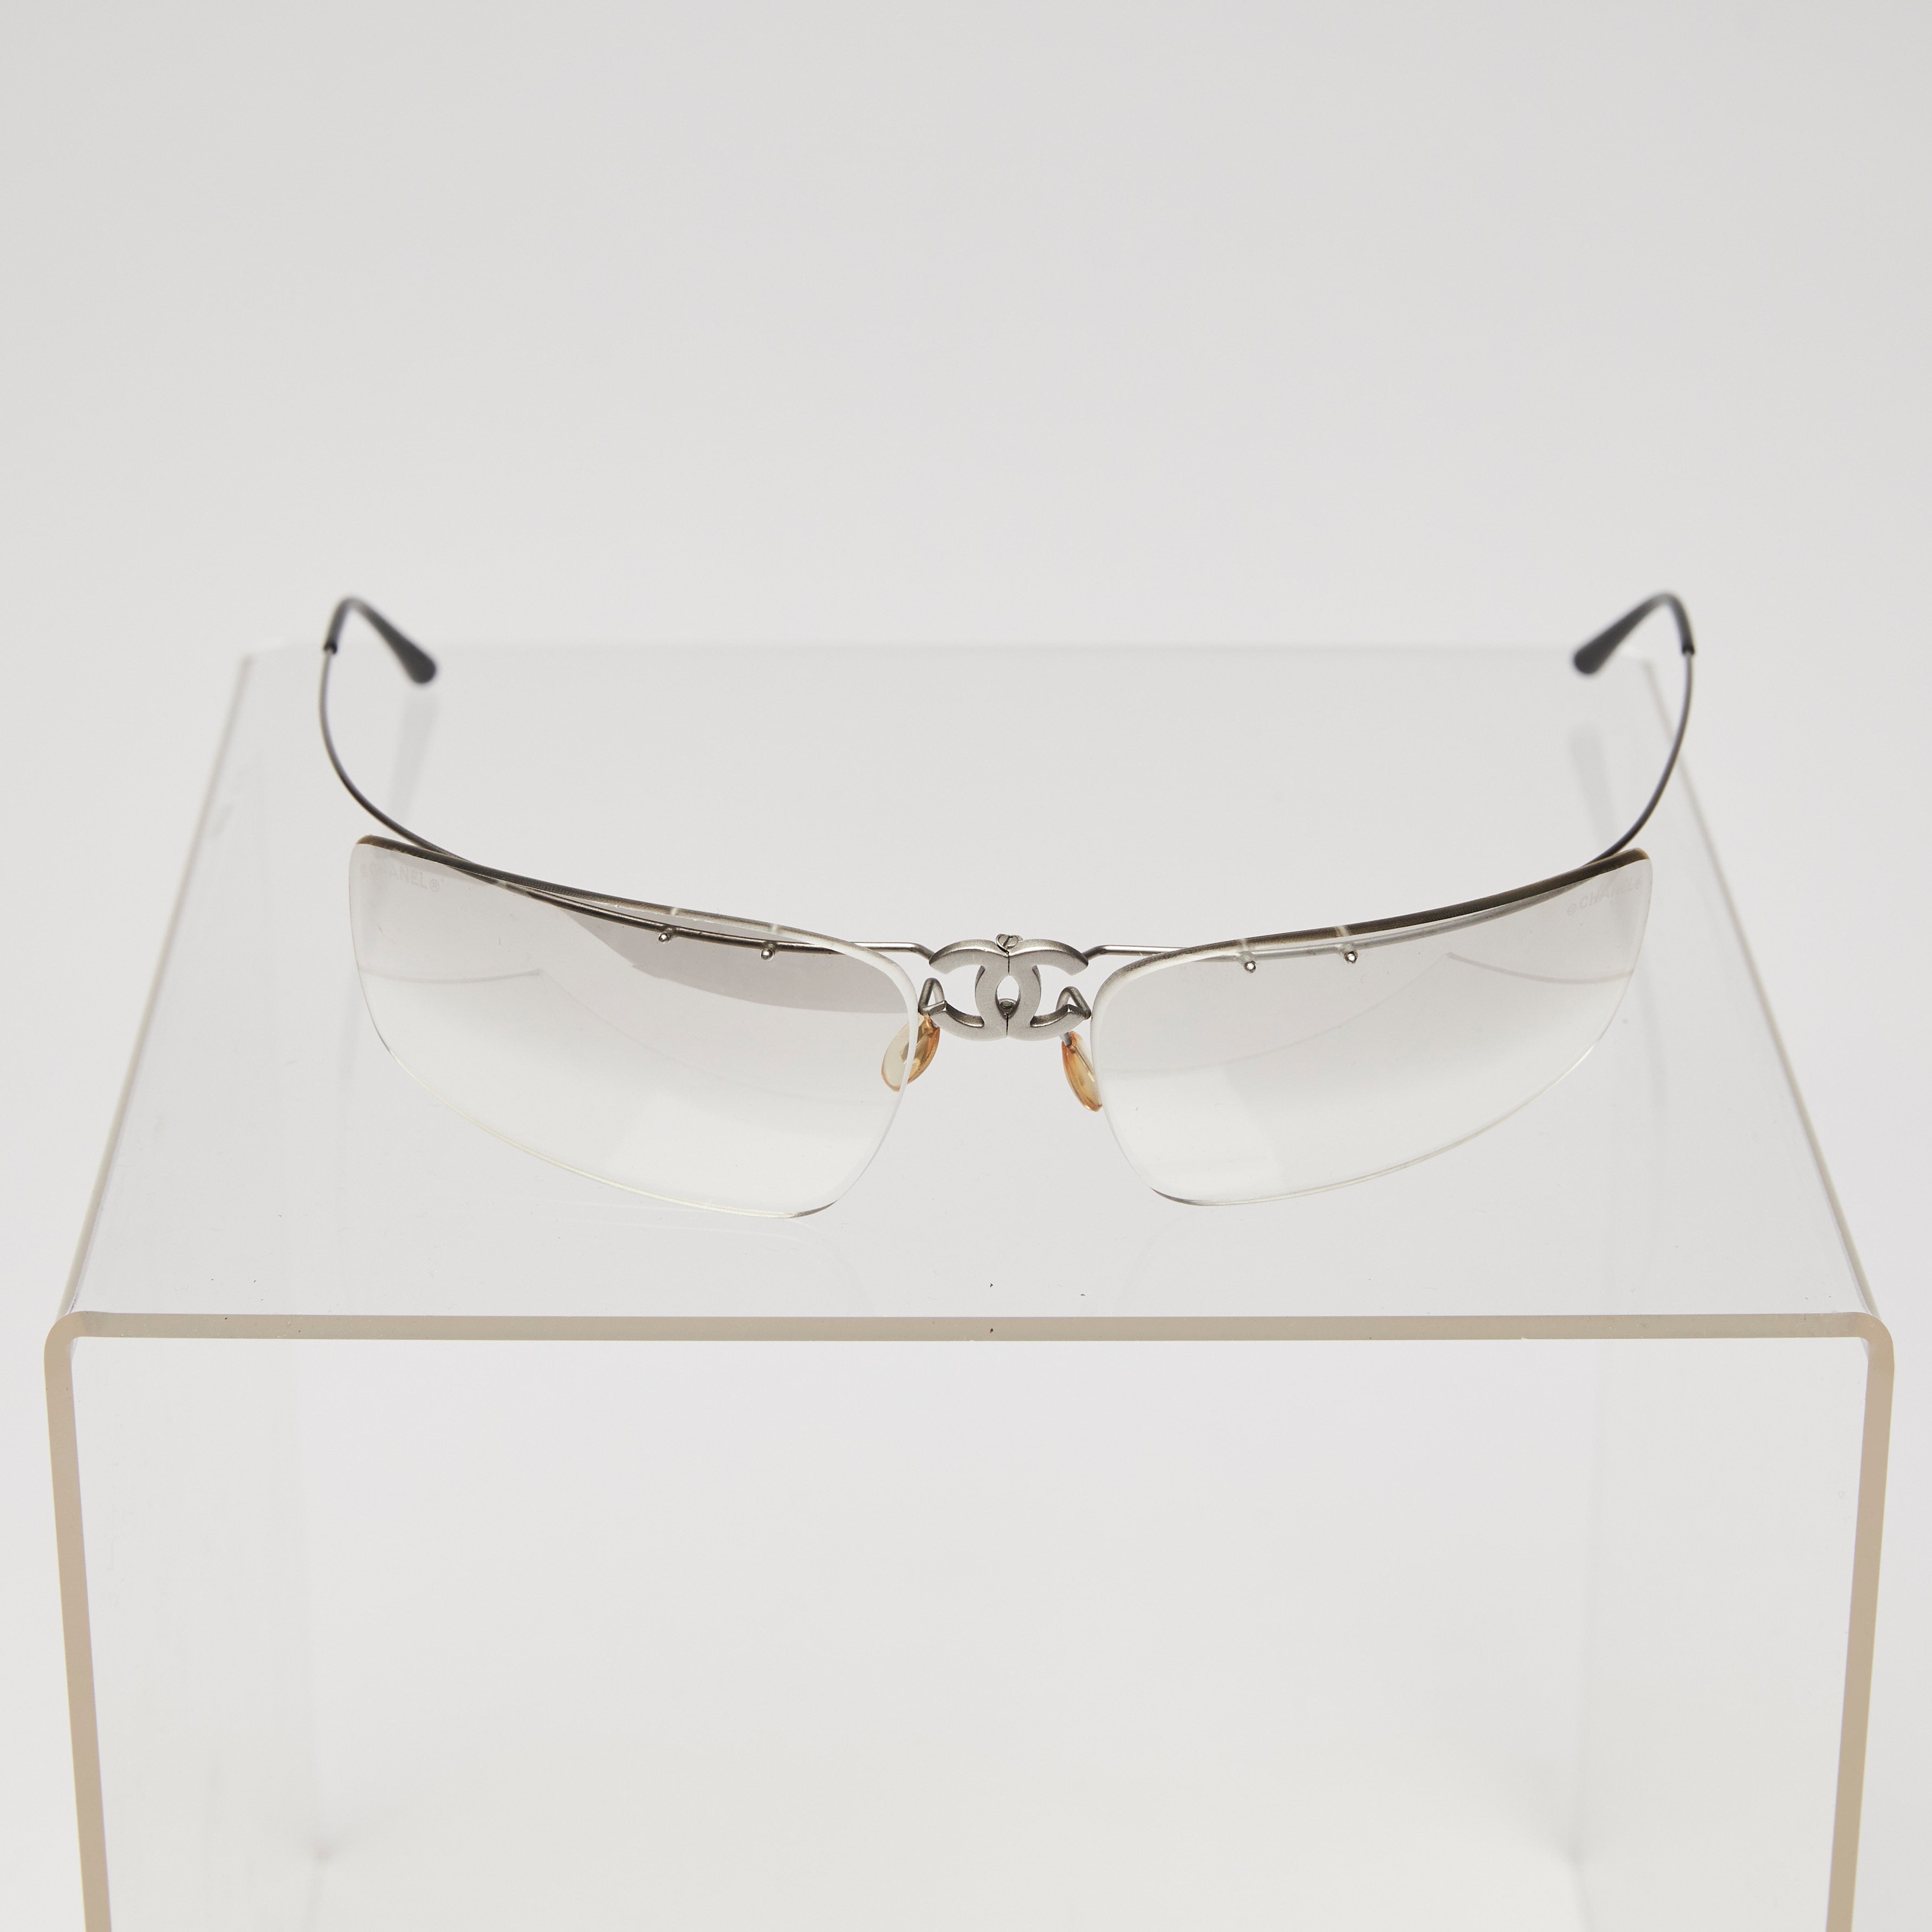 Chanel Frameless Foldable Logo Clear Sunglasses